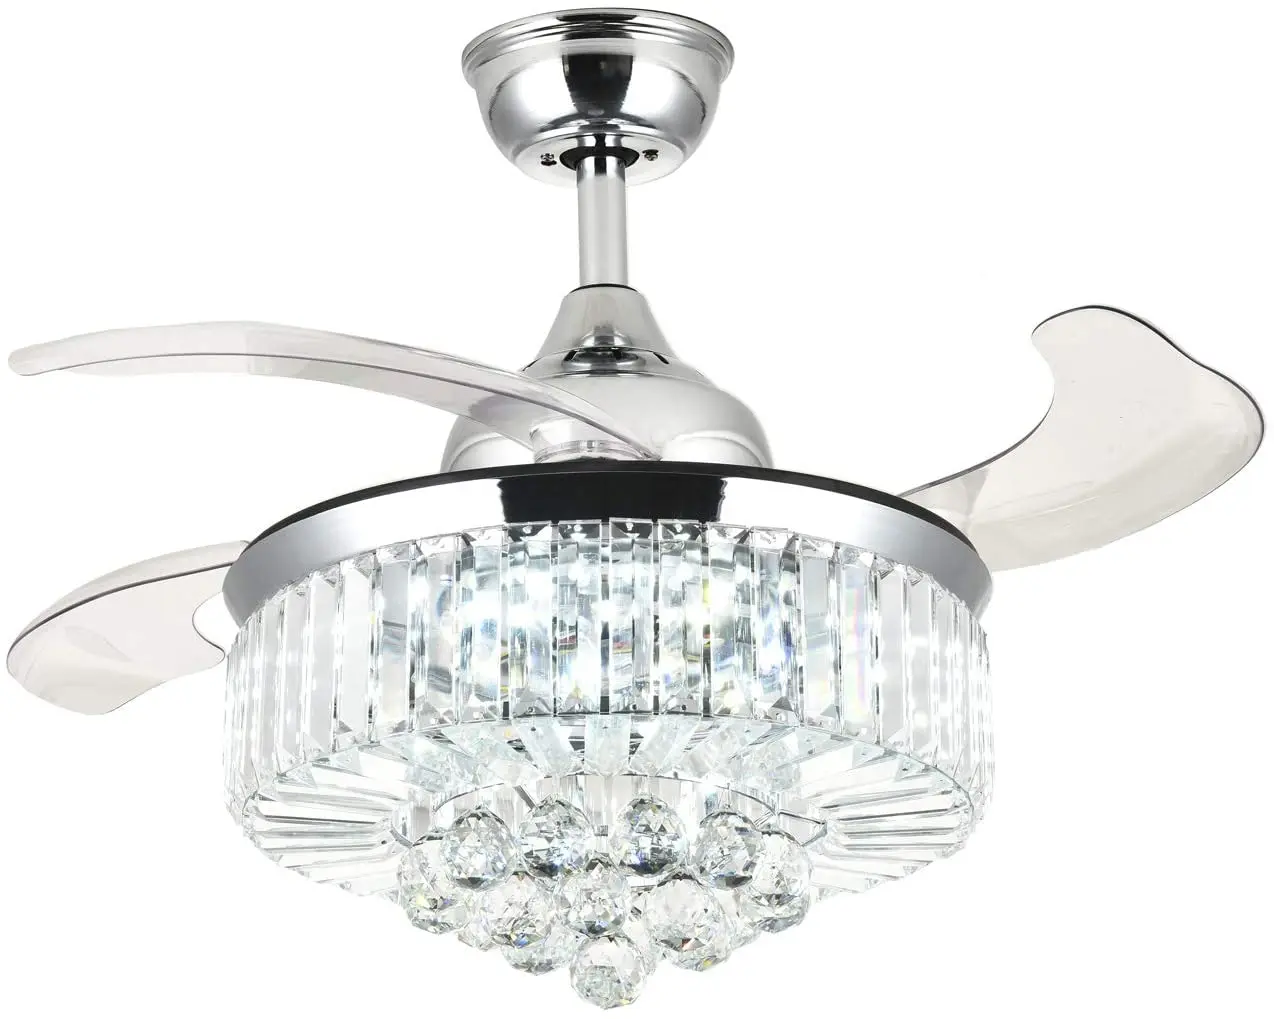 Modern Crystal Invisible Ceiling Fan Light Remote Control Fan Chandelier Lamp 